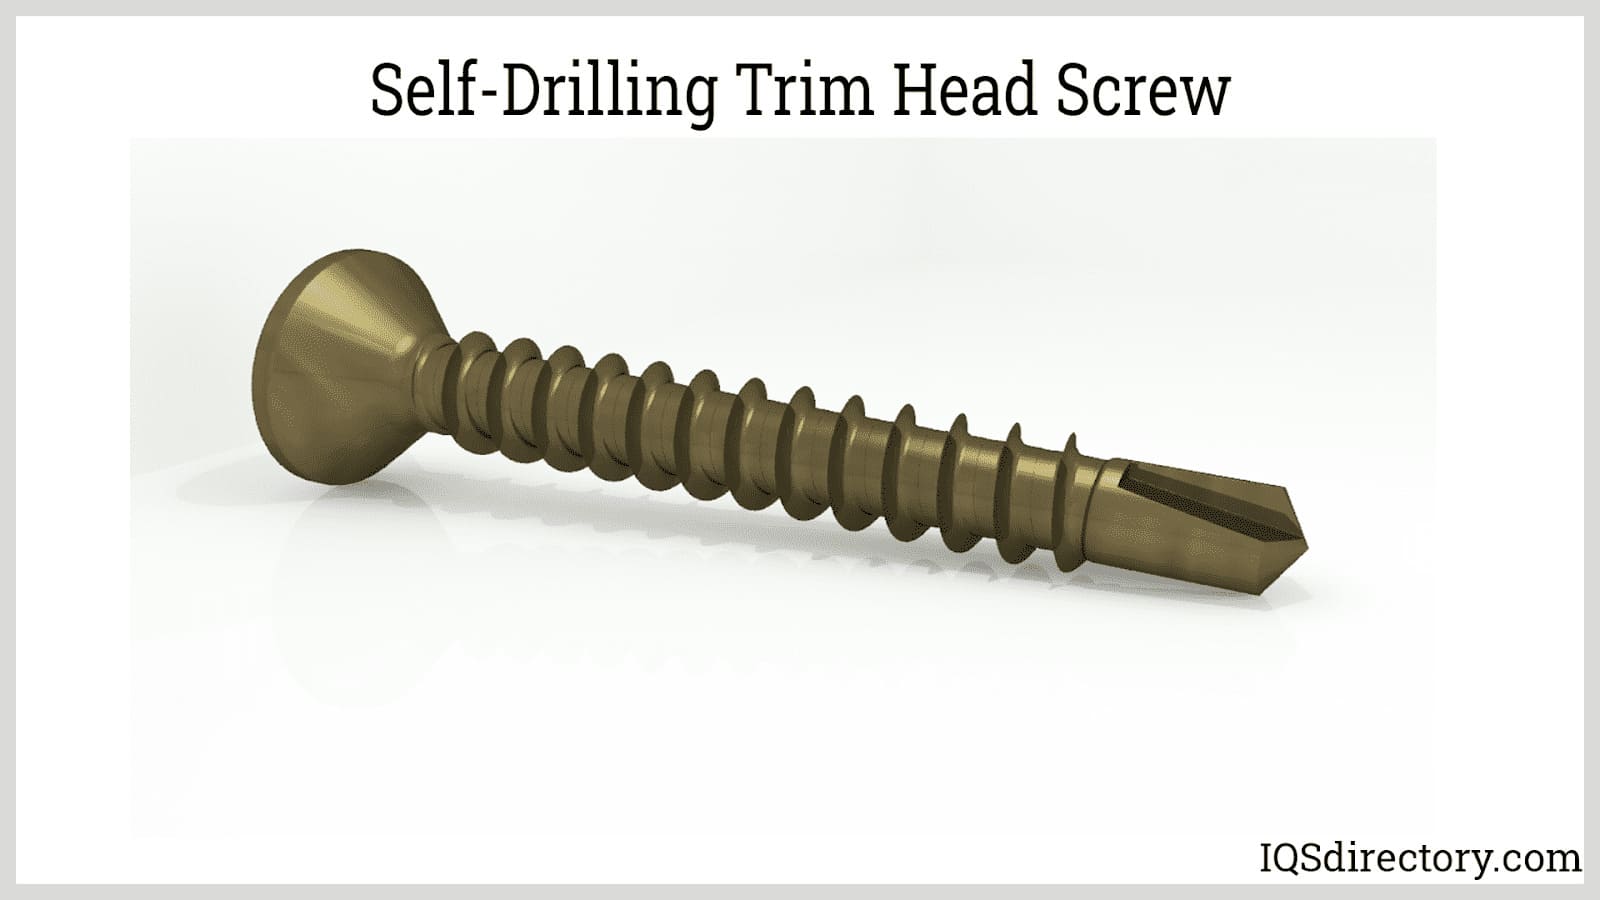 Self-Drilling Trim Head Screw